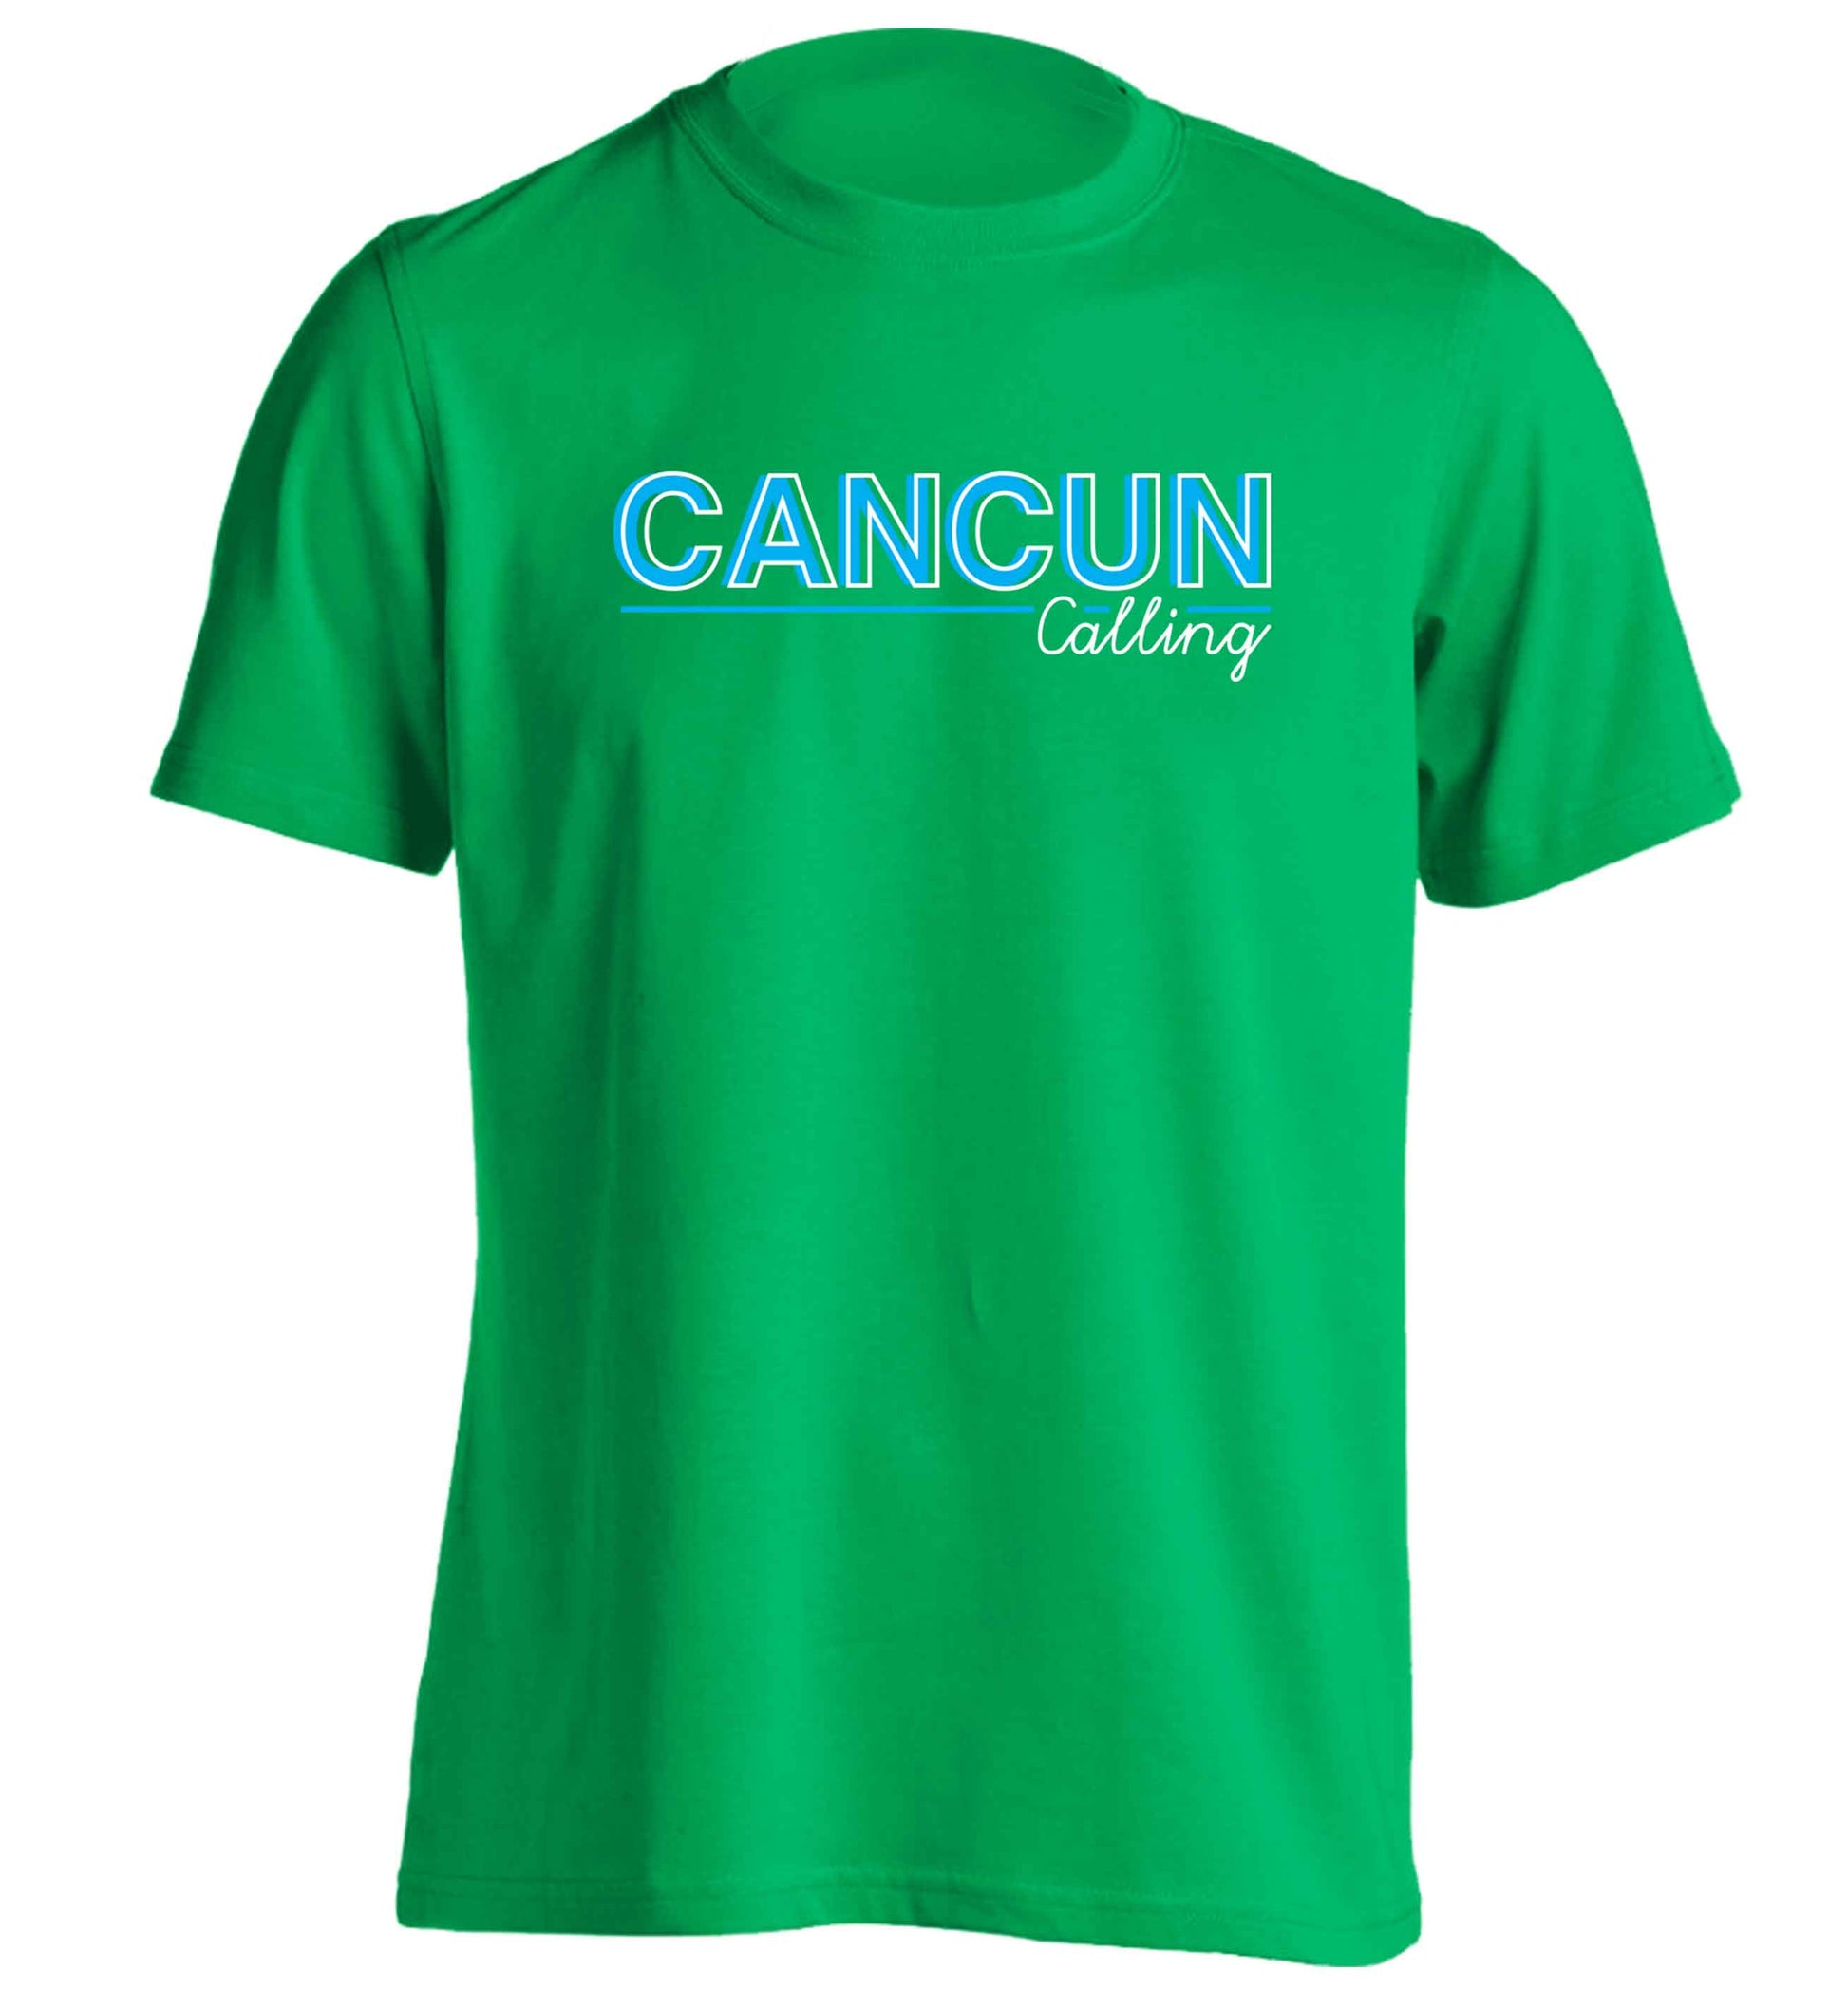 Cancun calling adults unisex green Tshirt 2XL